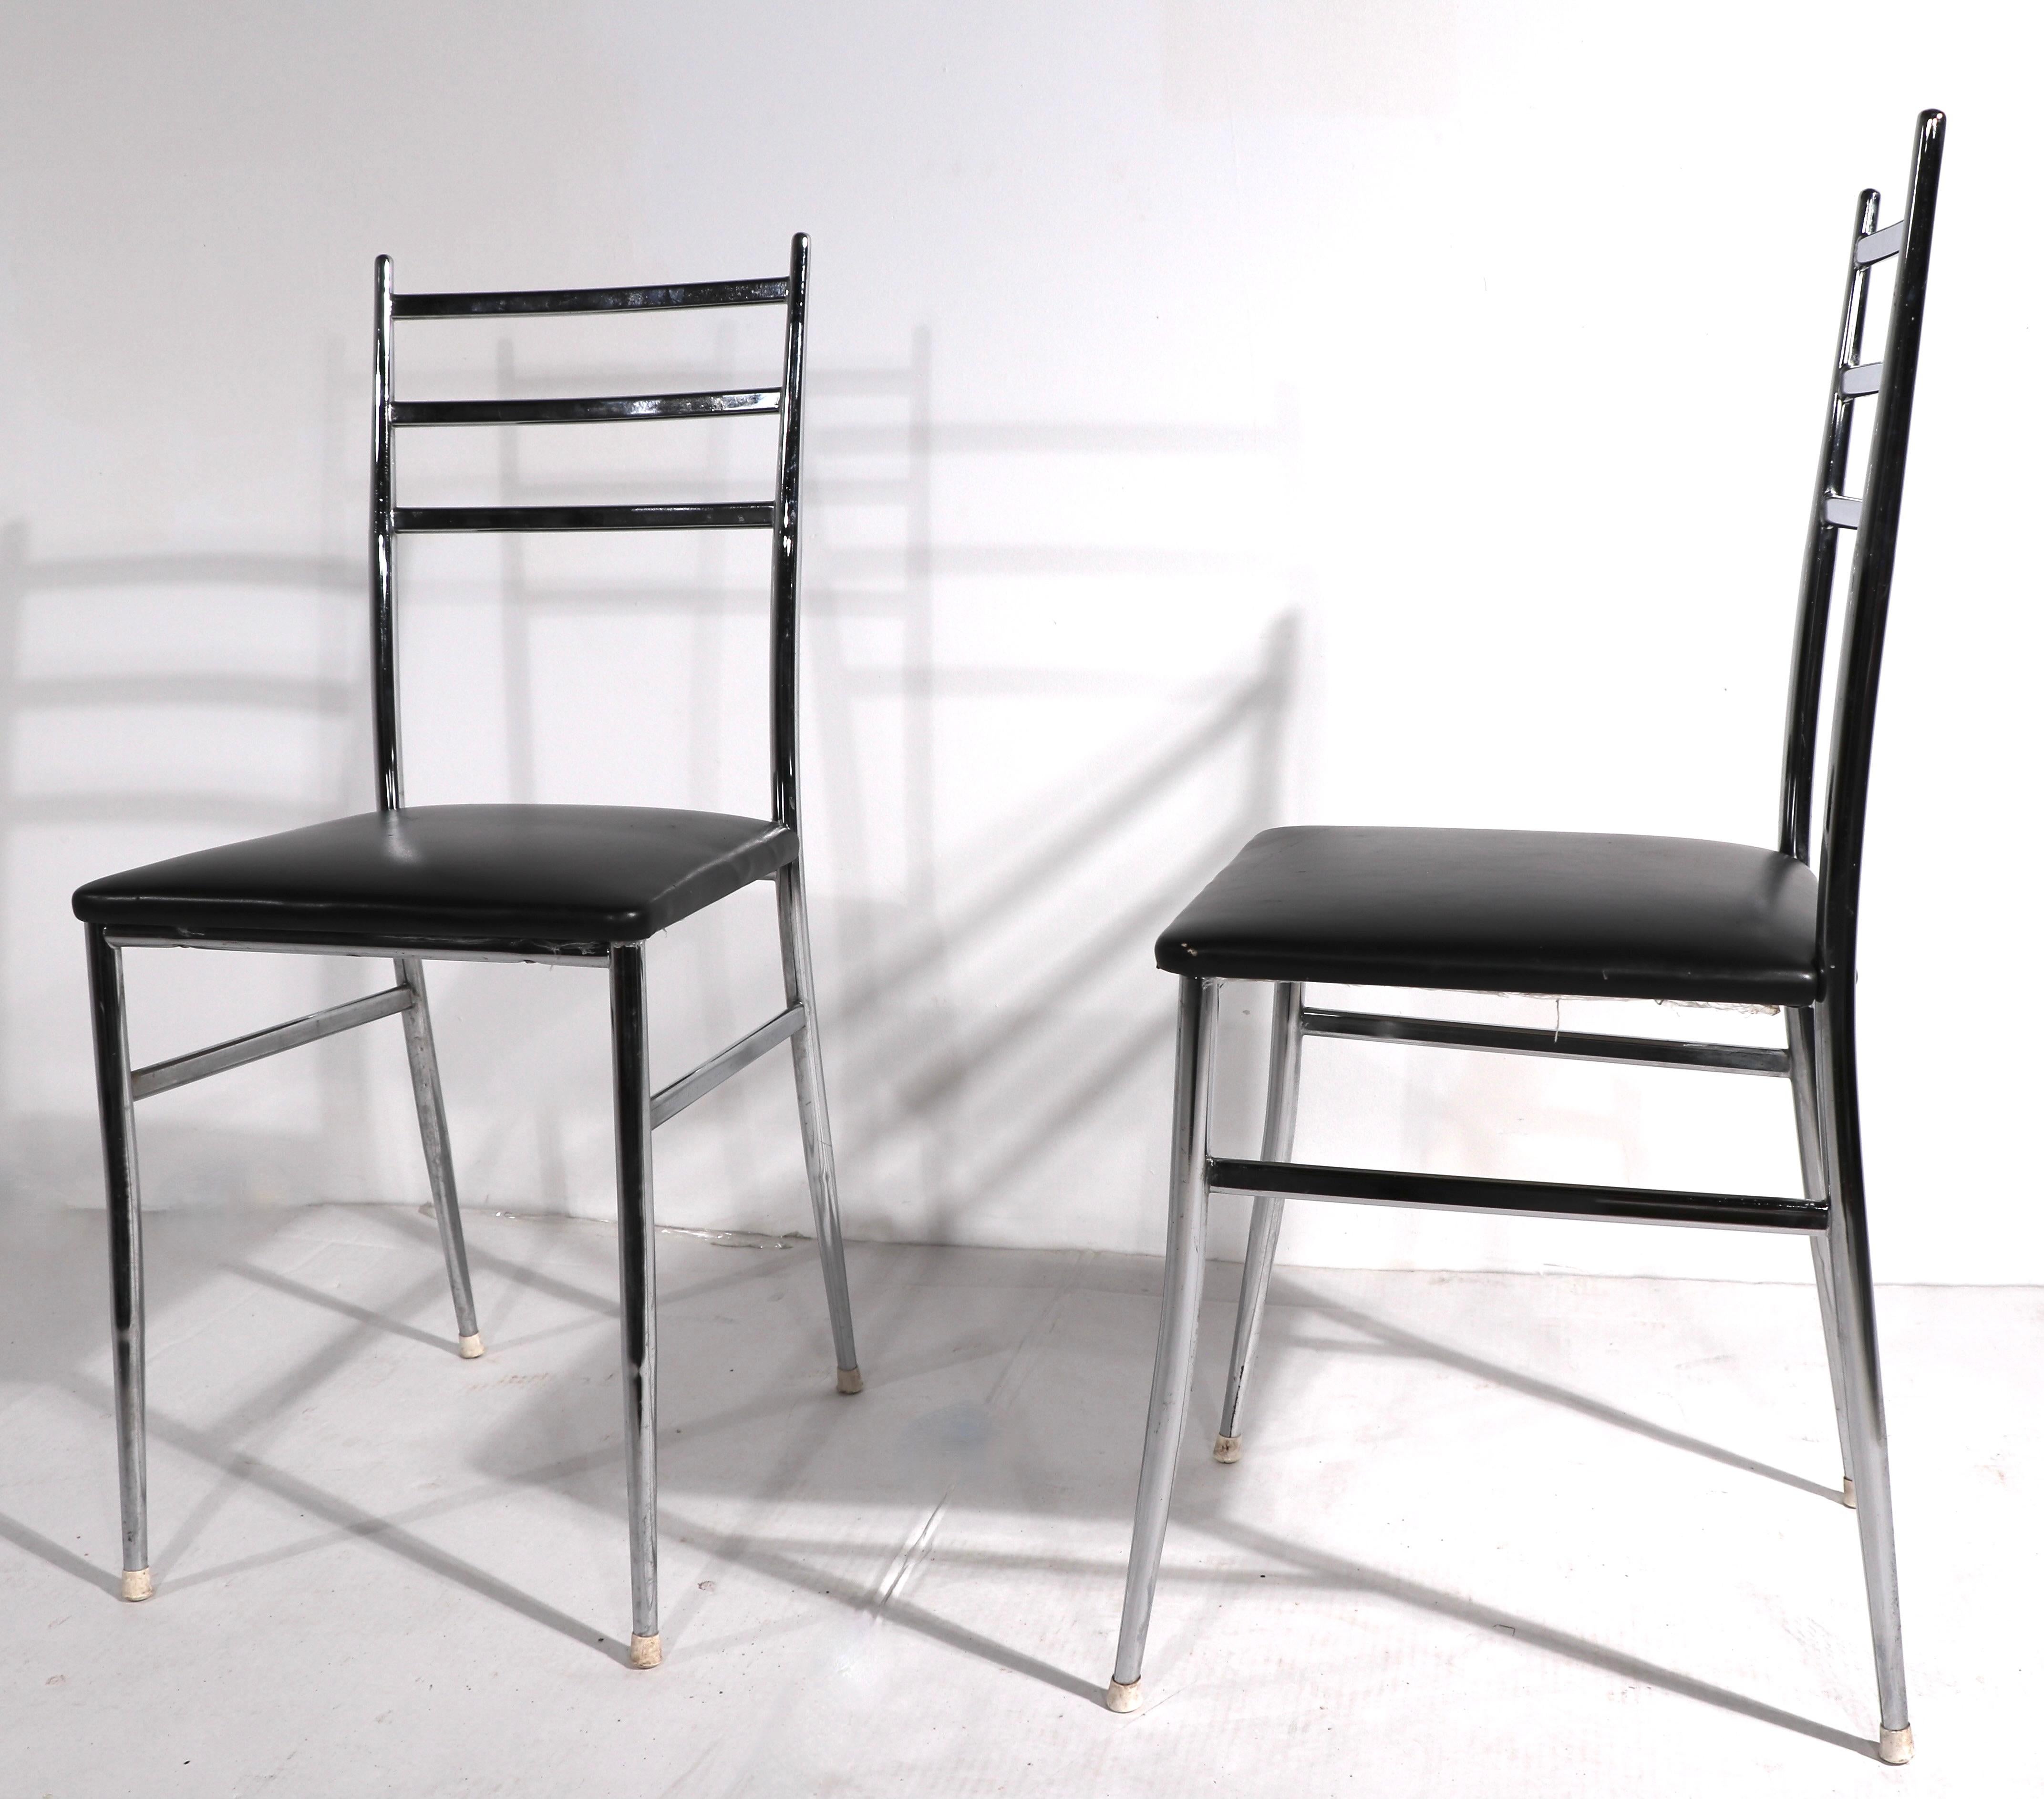 20th Century Pr. of Chrome Superleggera Chairs Retailed by W & J Sloane